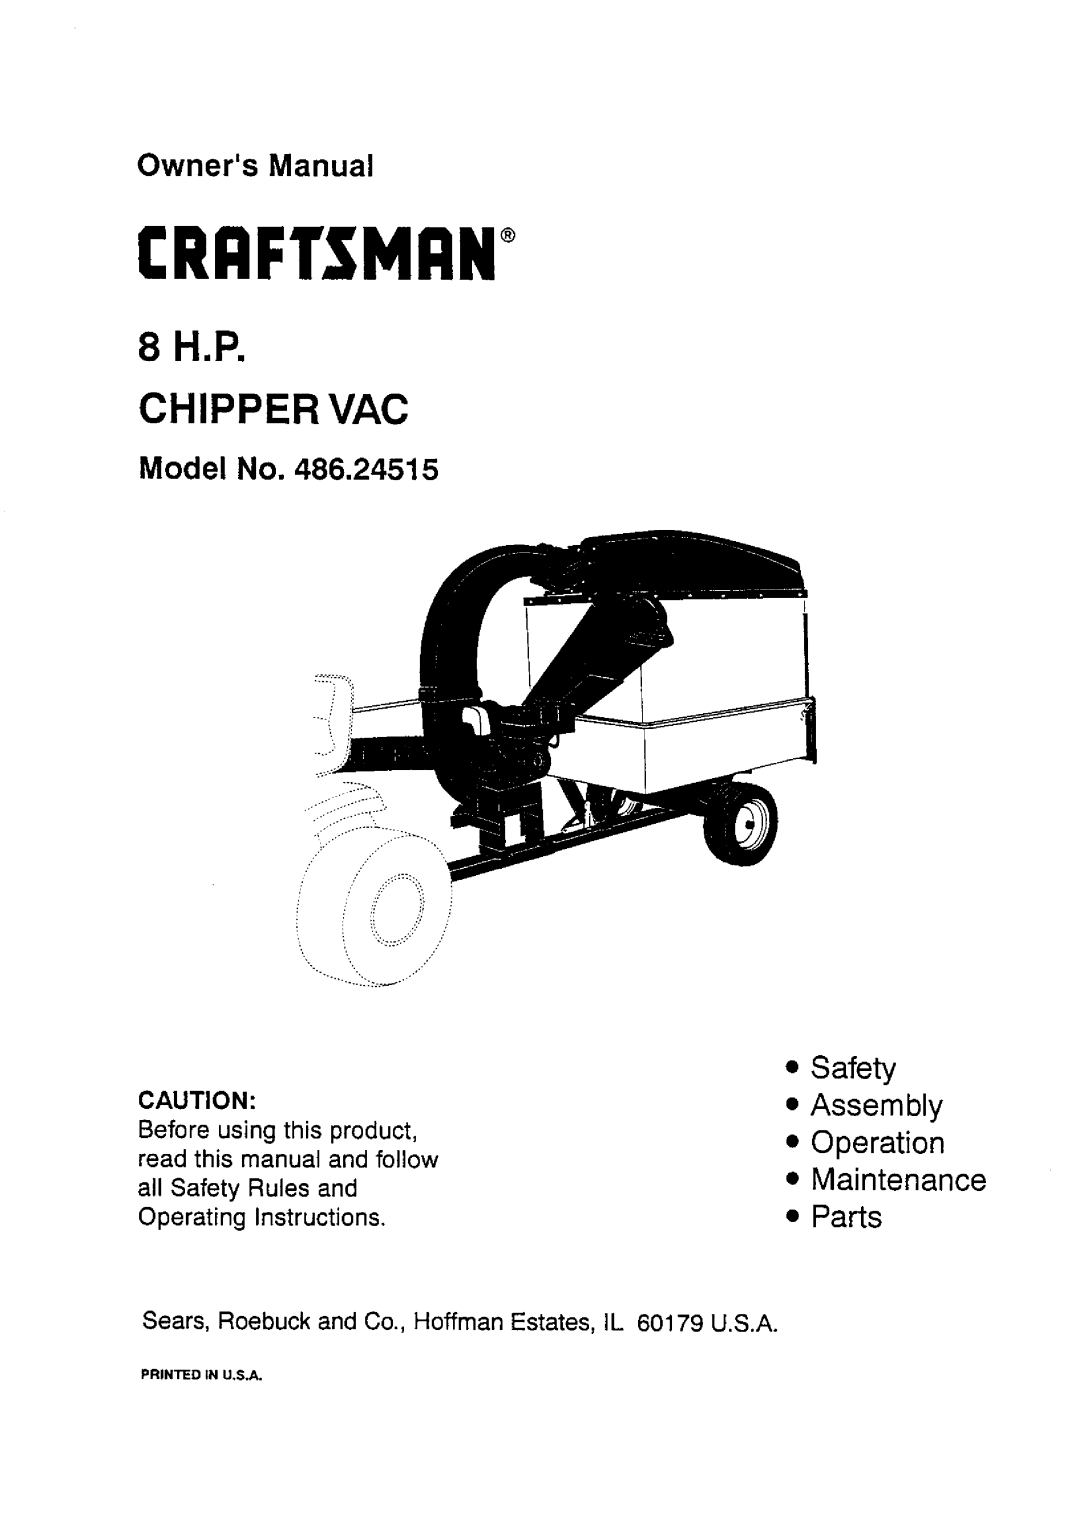 Craftsman 486.24515 owner manual 8H.P CHIPPER VAC, Model No, Safety Assembly Operation Maintenance Parts, I Rrftsmrn 